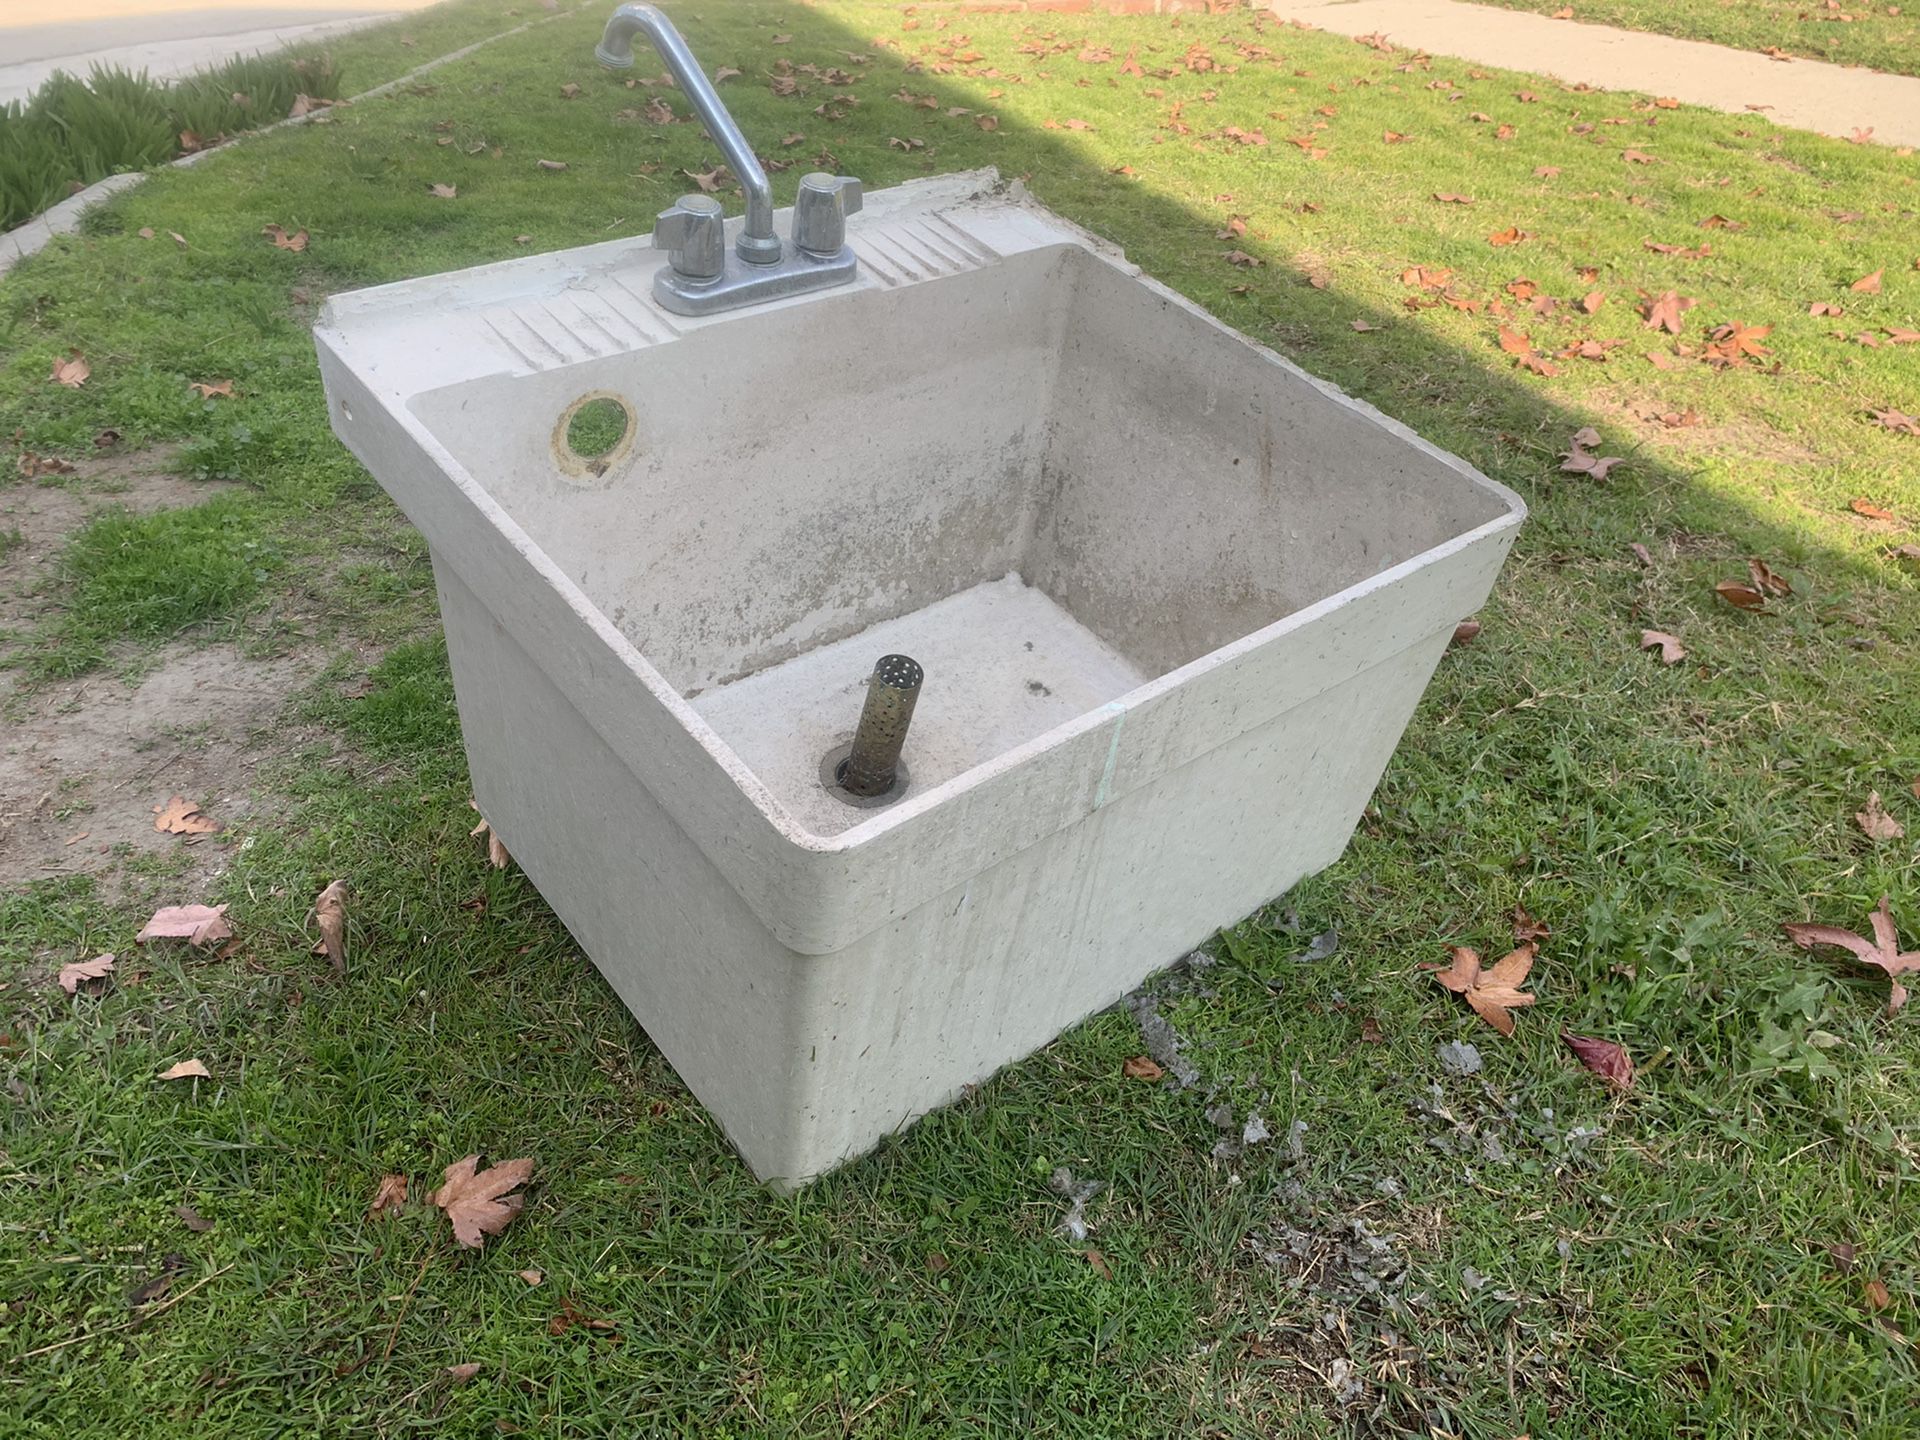 Composite outdoor sink. “FREE”